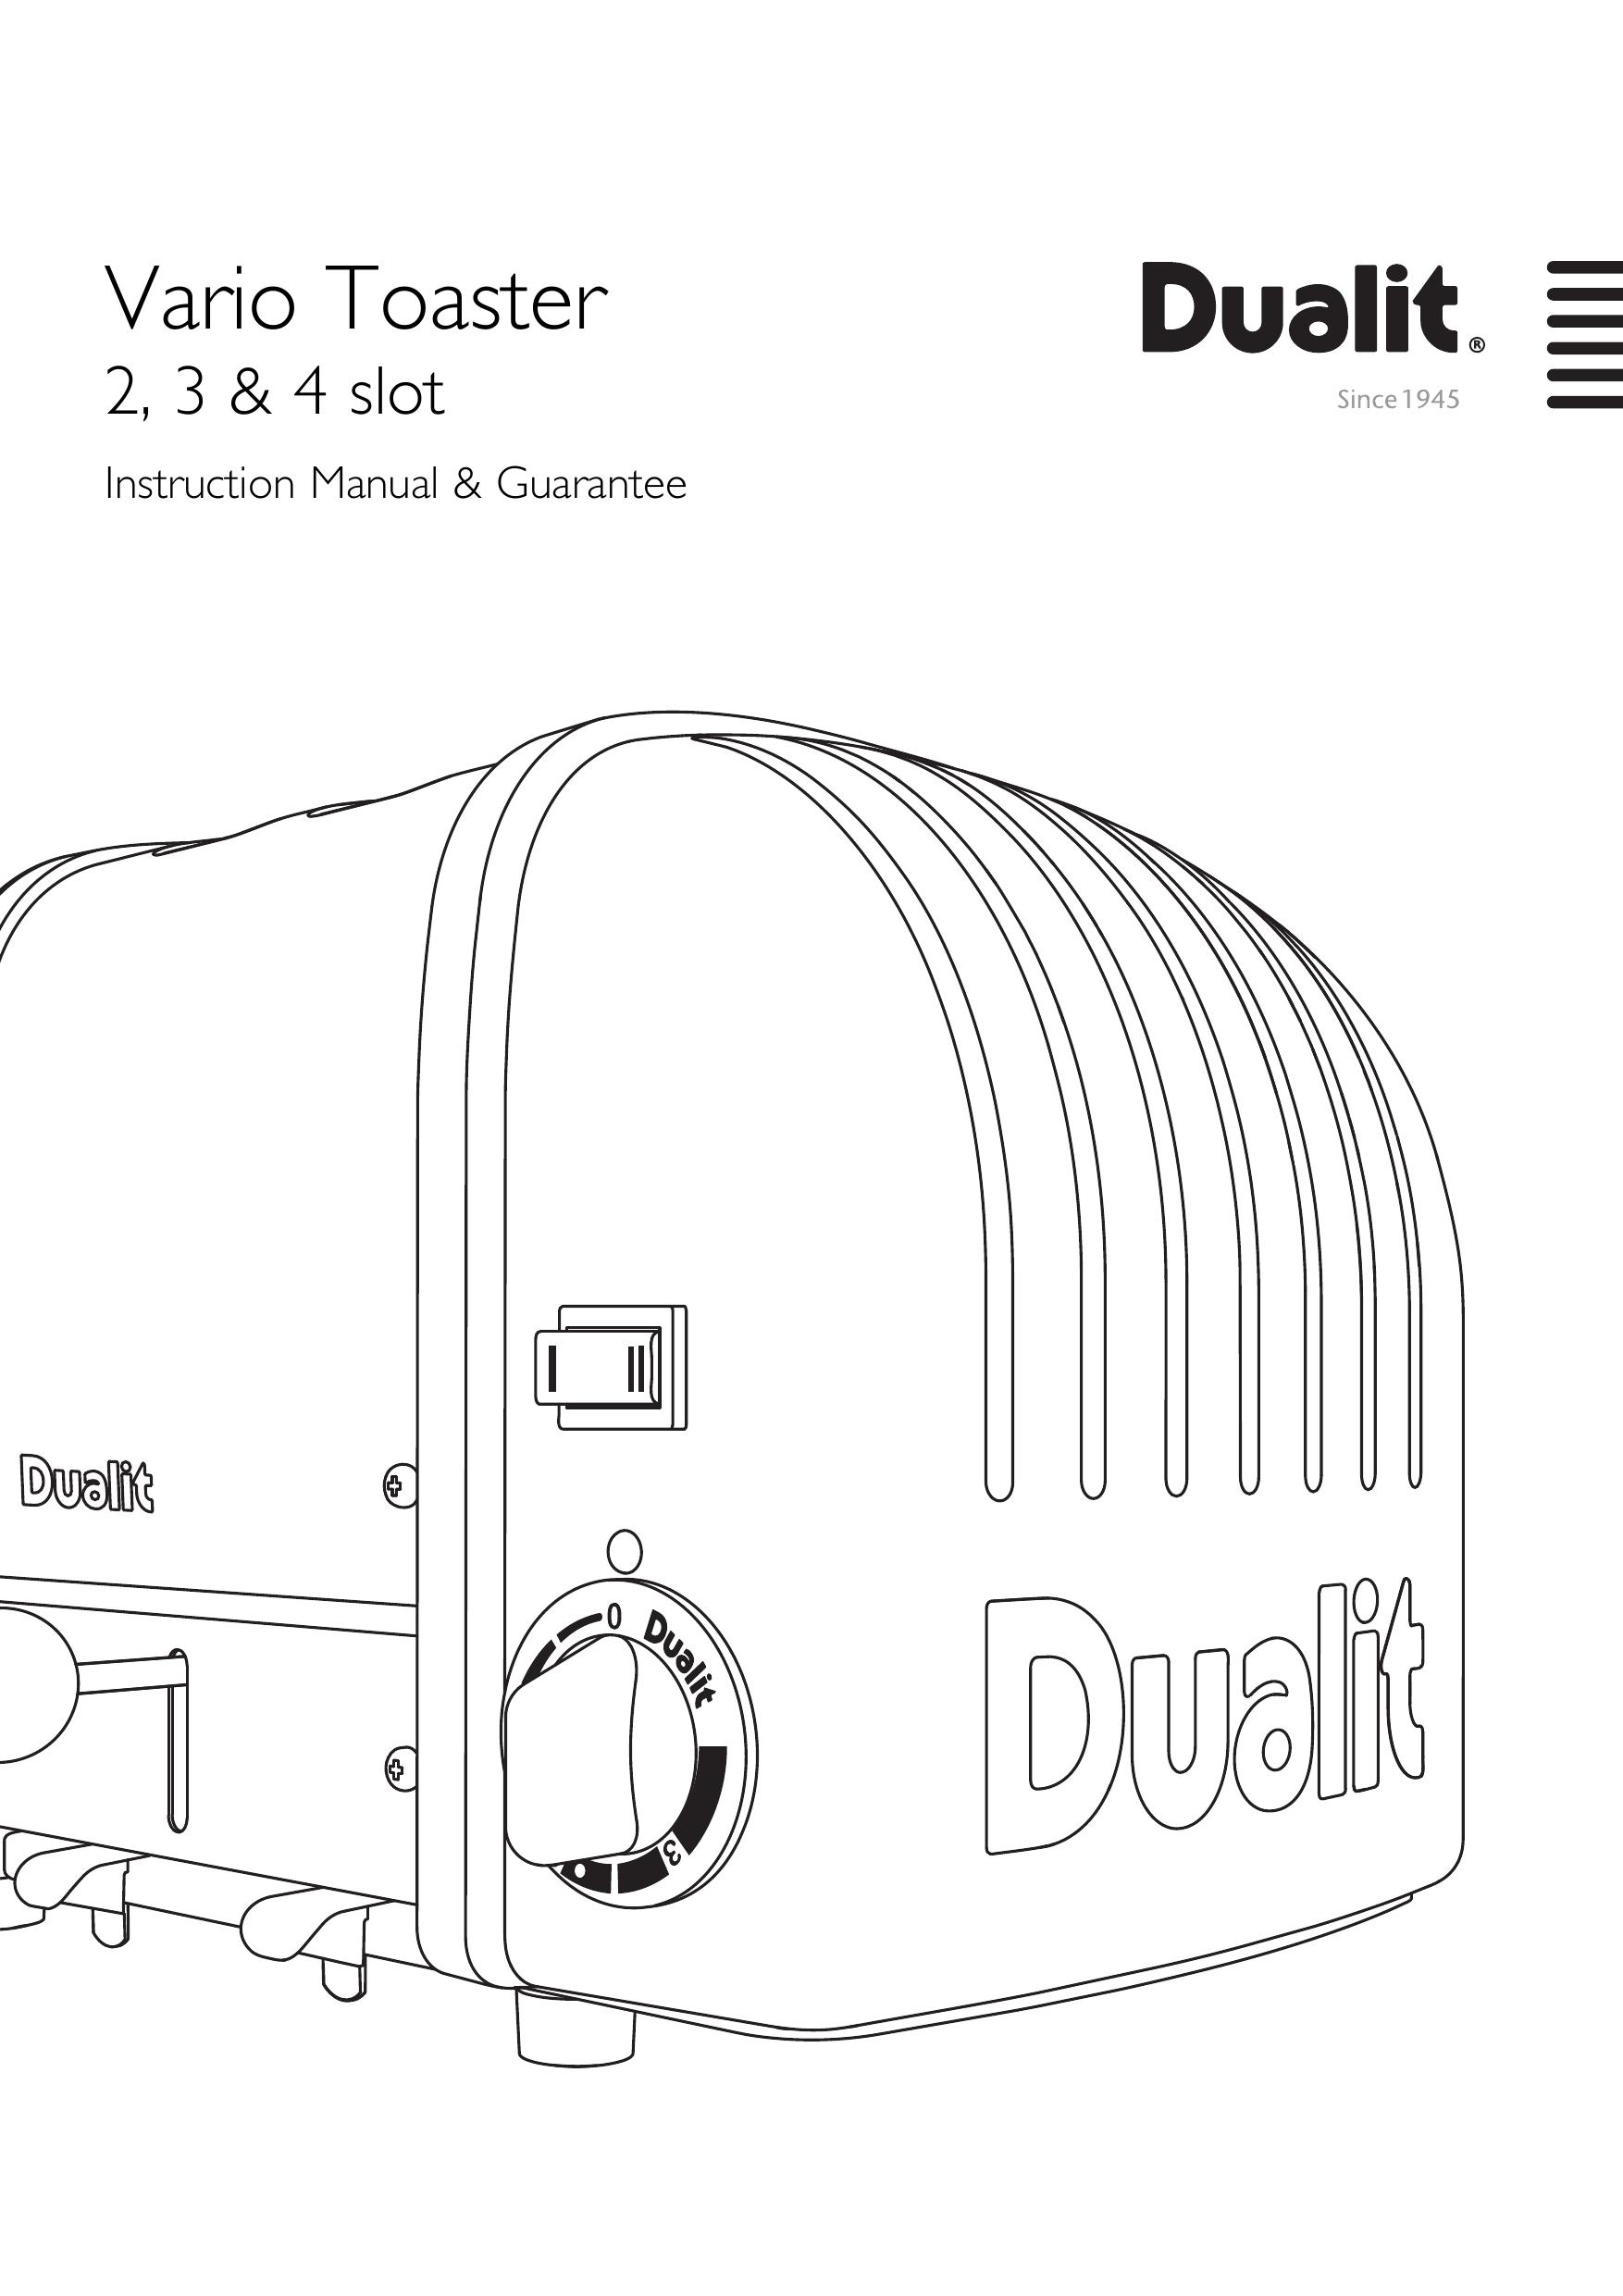 Dualit 27169 Toaster User Manual